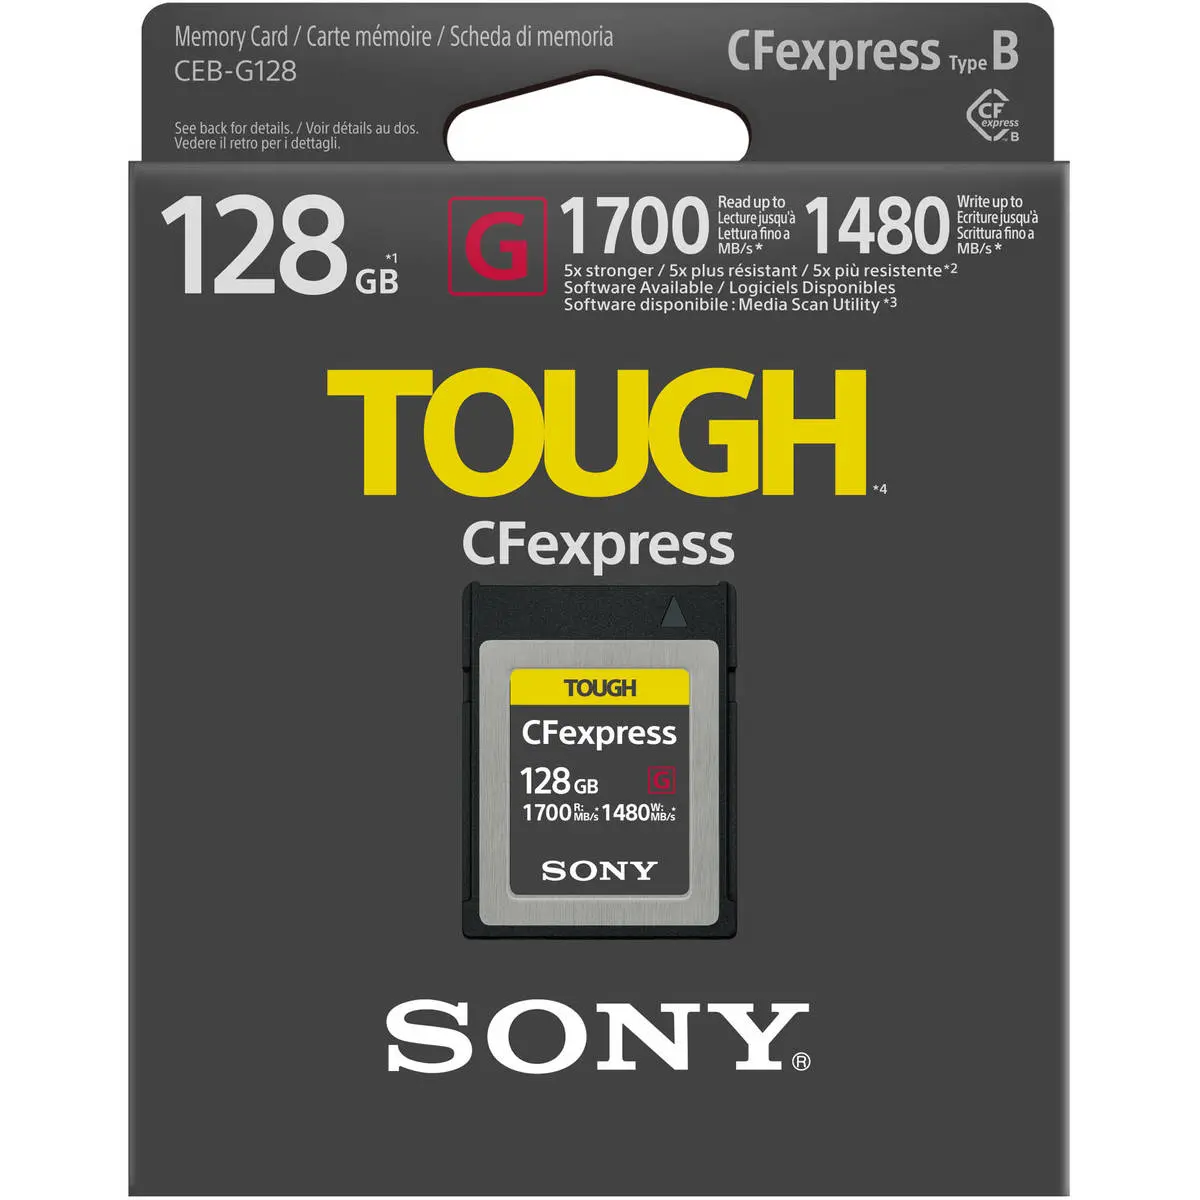 1. Sony CEB-G128 128GB CFexpress Type B 1700mb/s